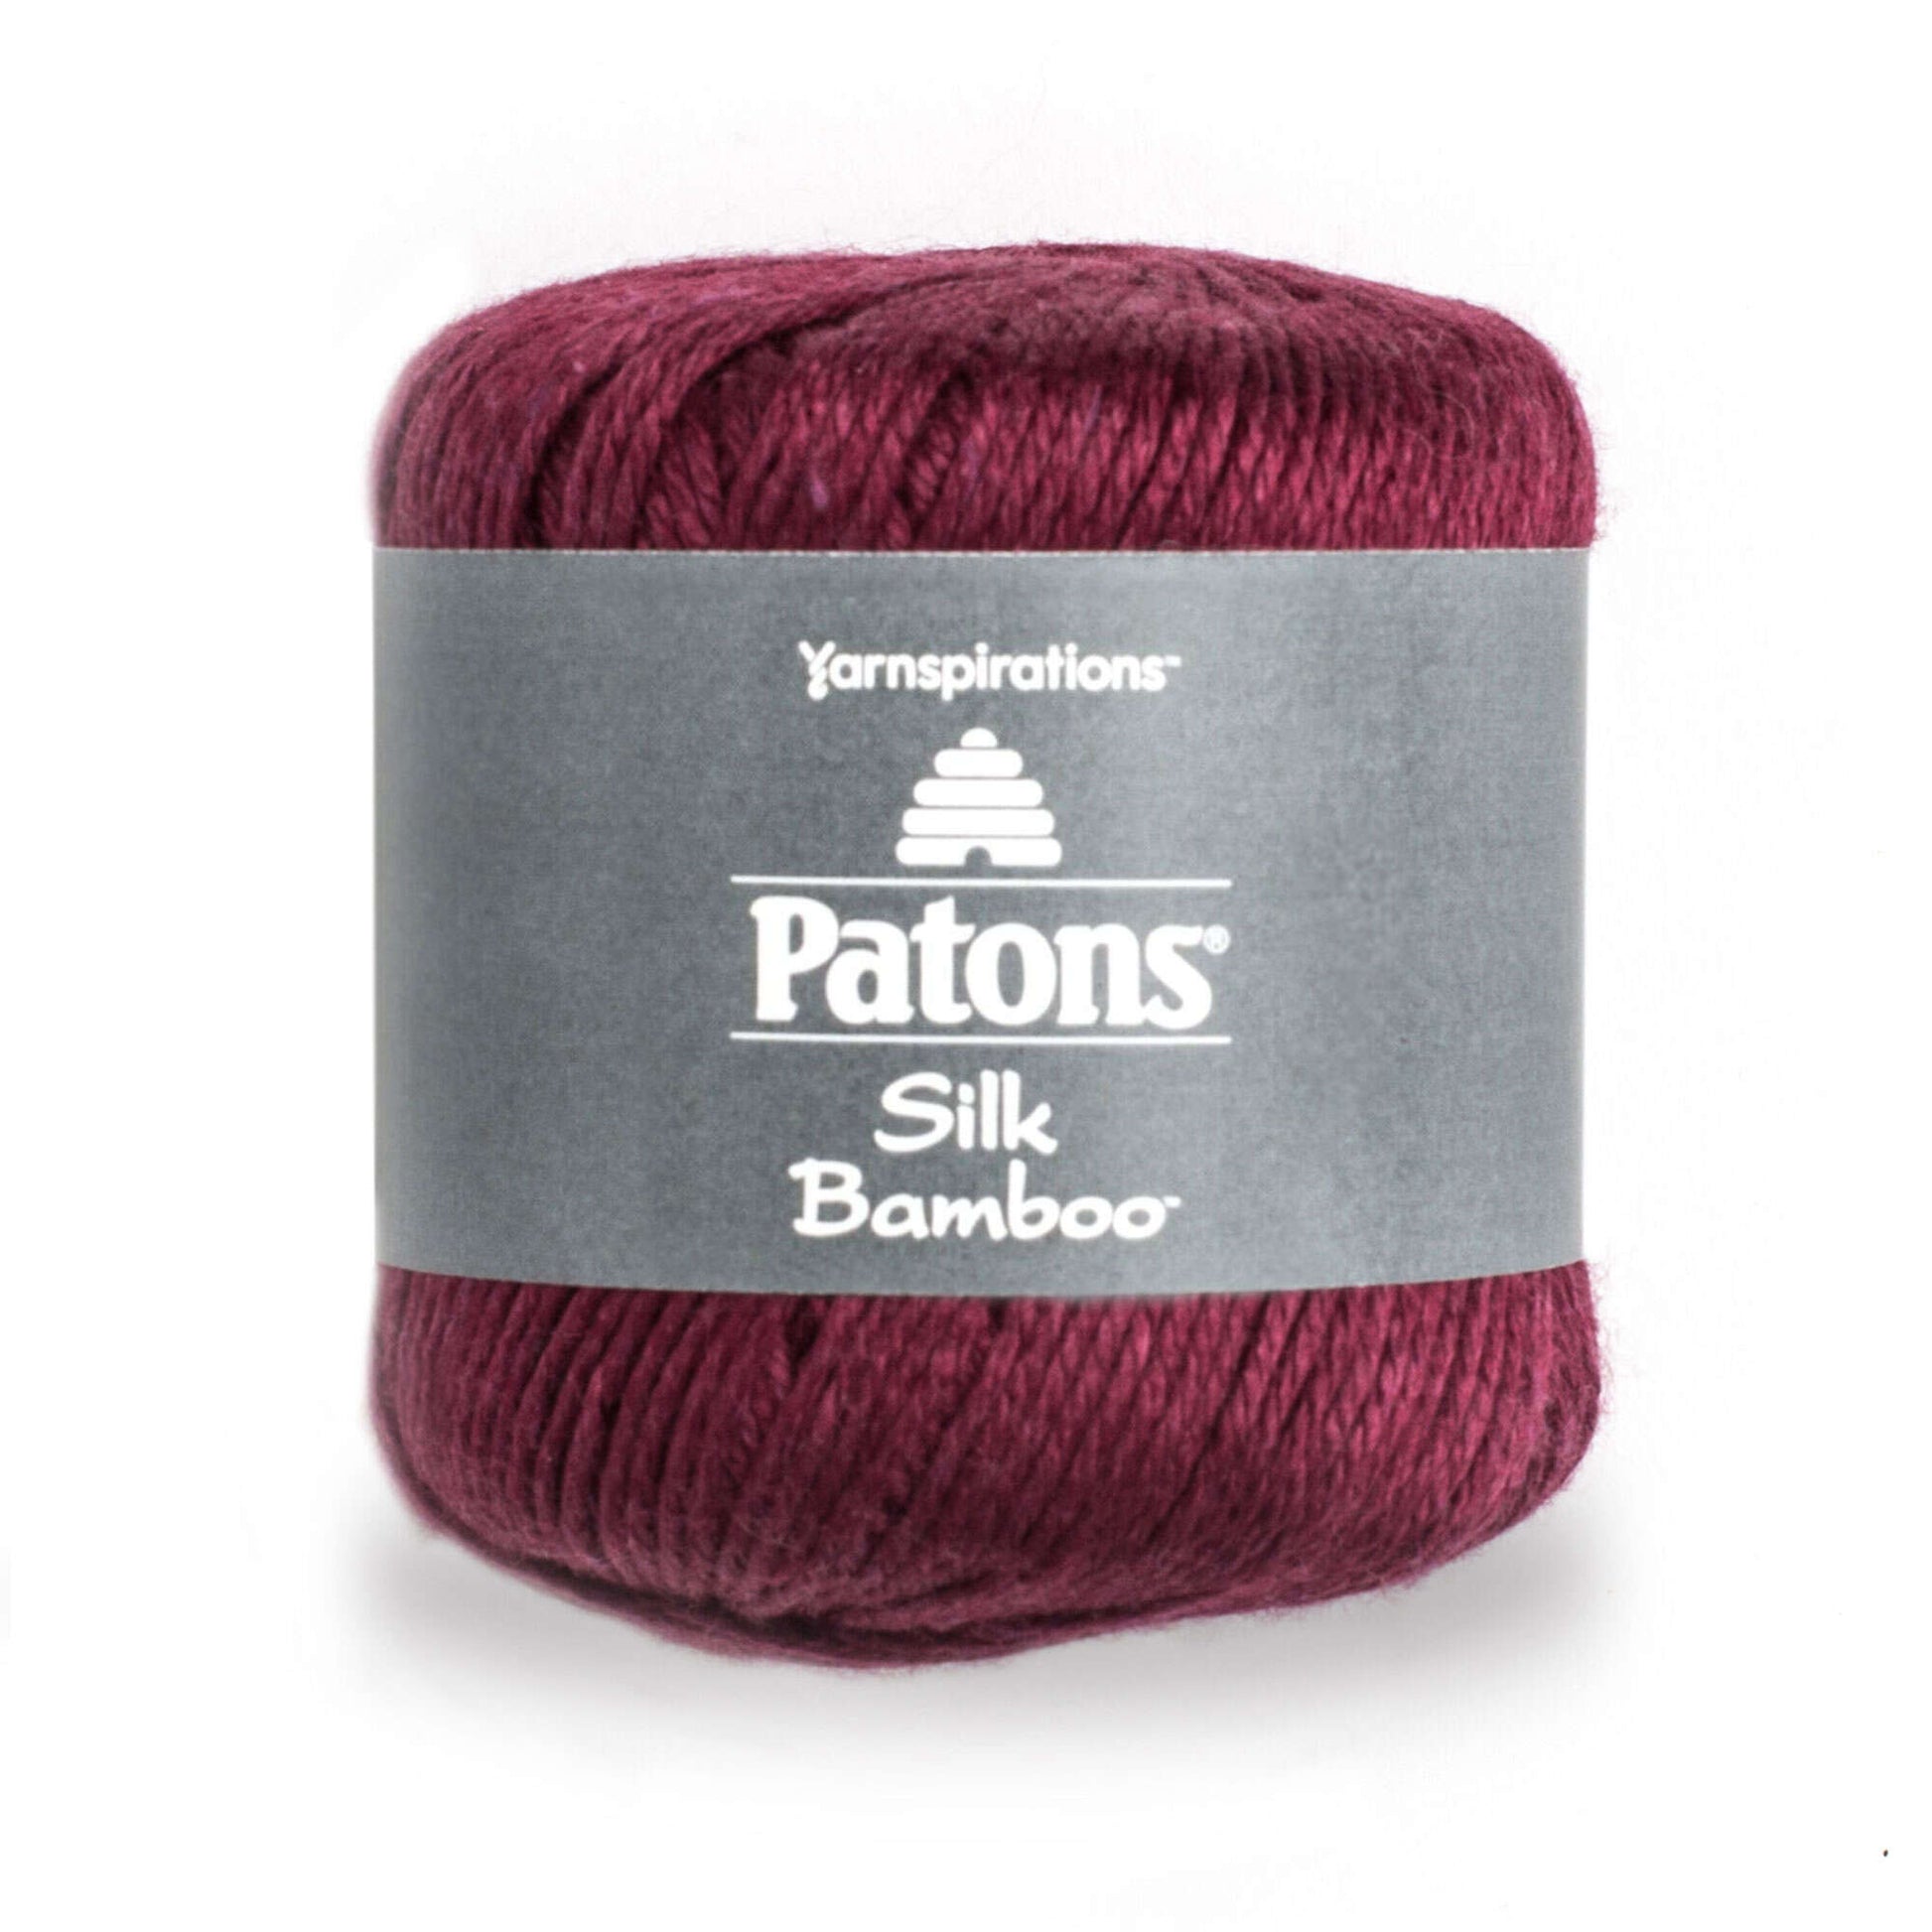 Patons Silk Bamboo Yarn - Discontinued Shades Plum